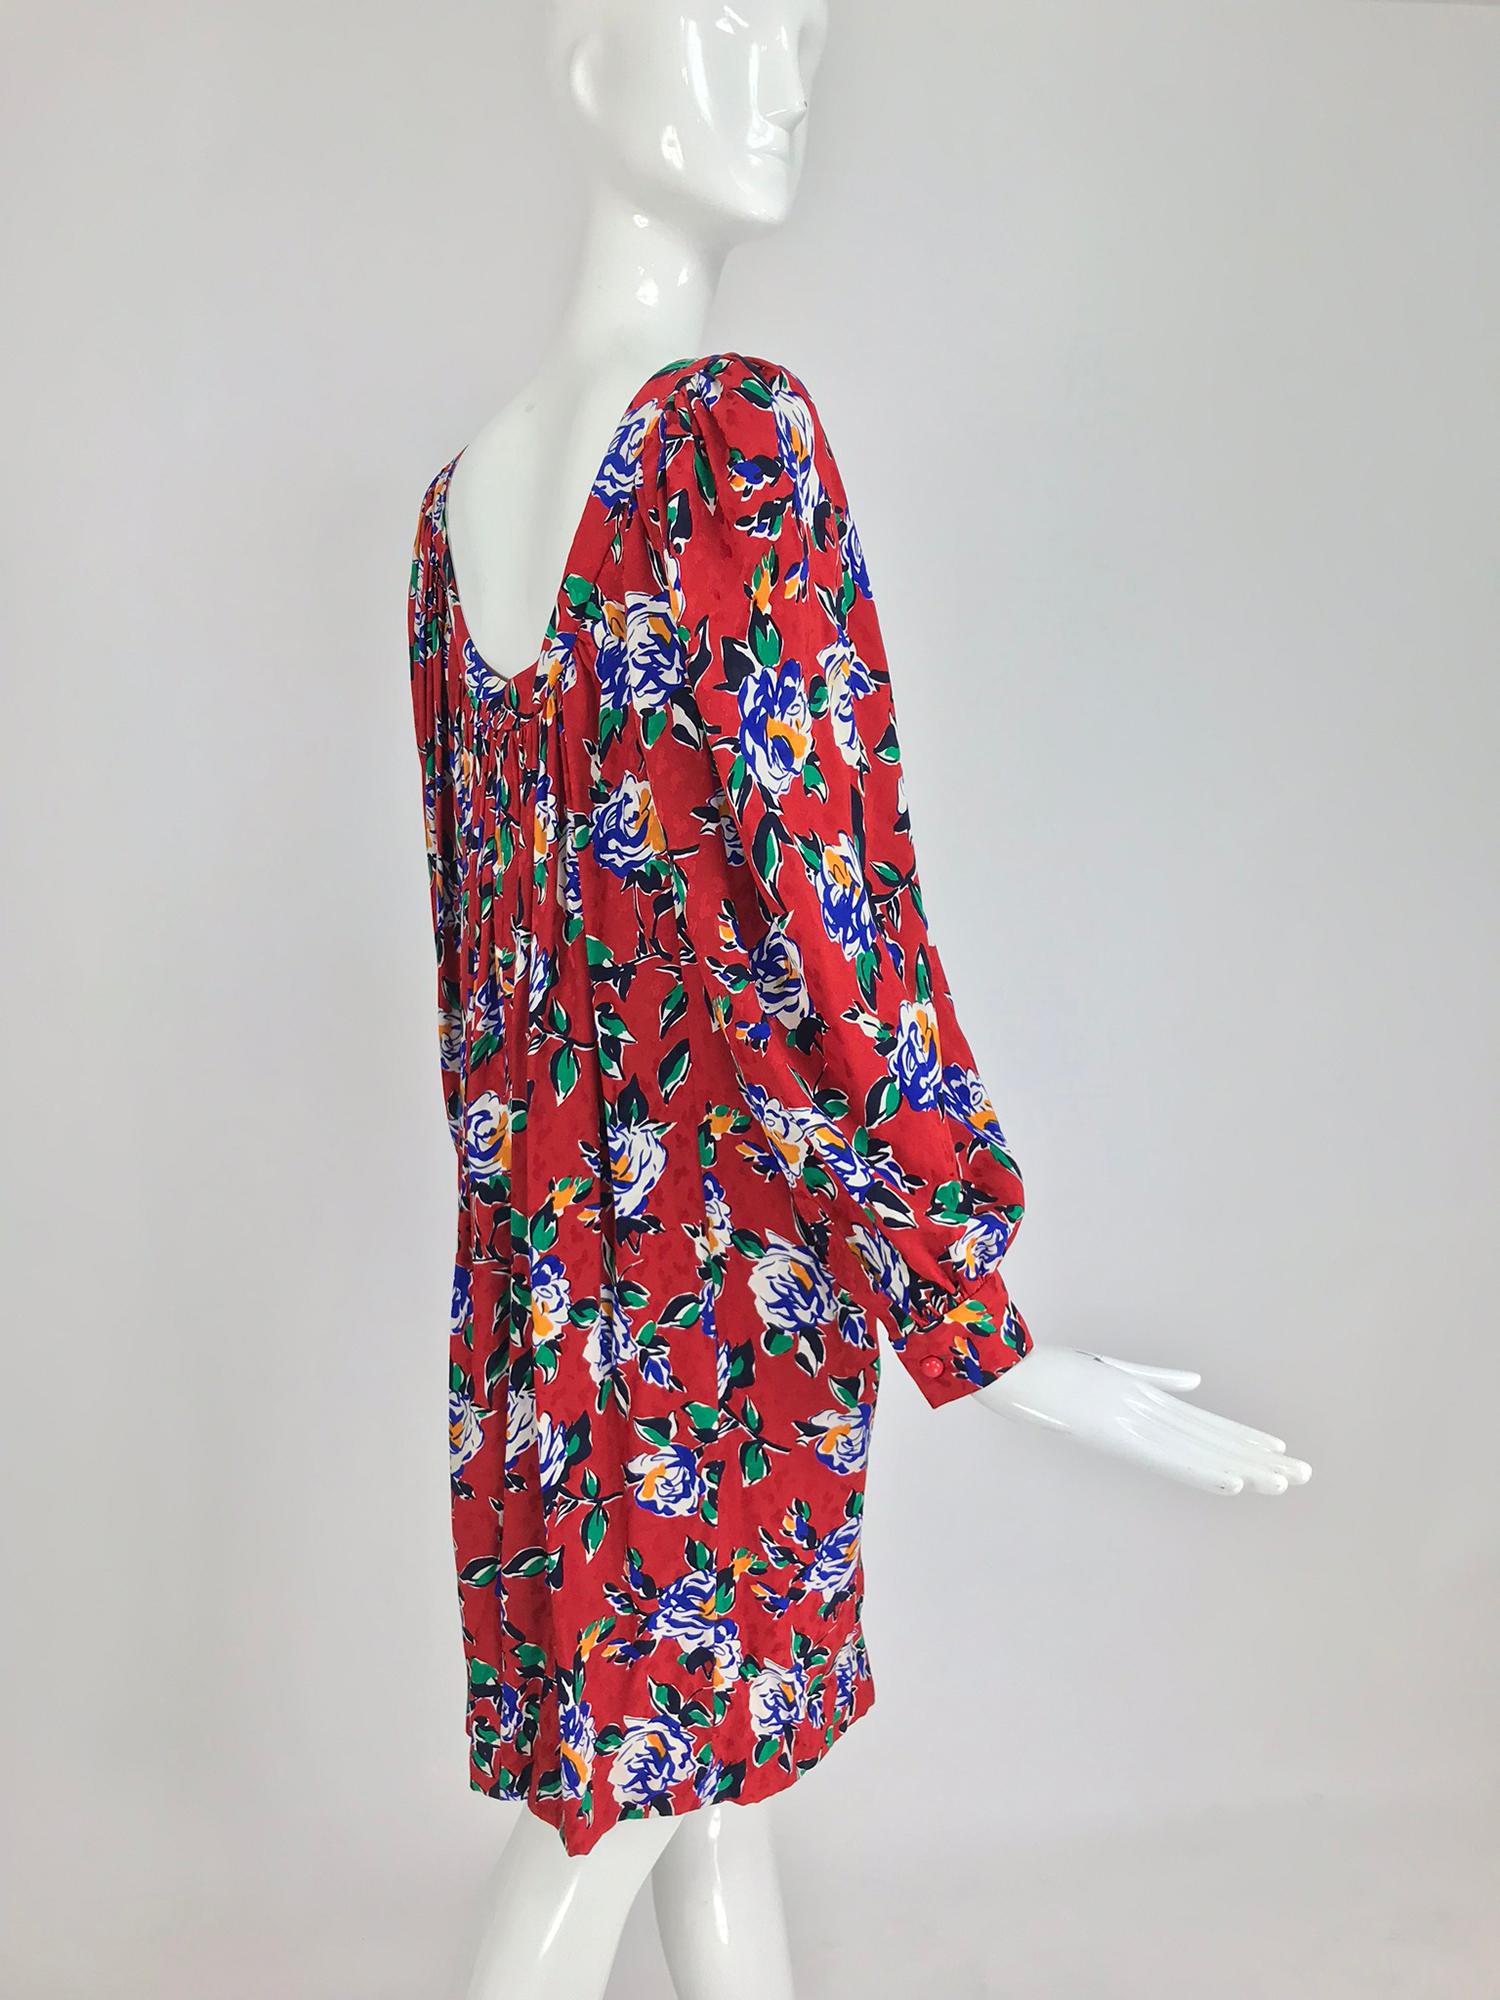 Yves Saint Laurent Red Floral Silk Jacquard Scoop Neck Dress, 1980s 5